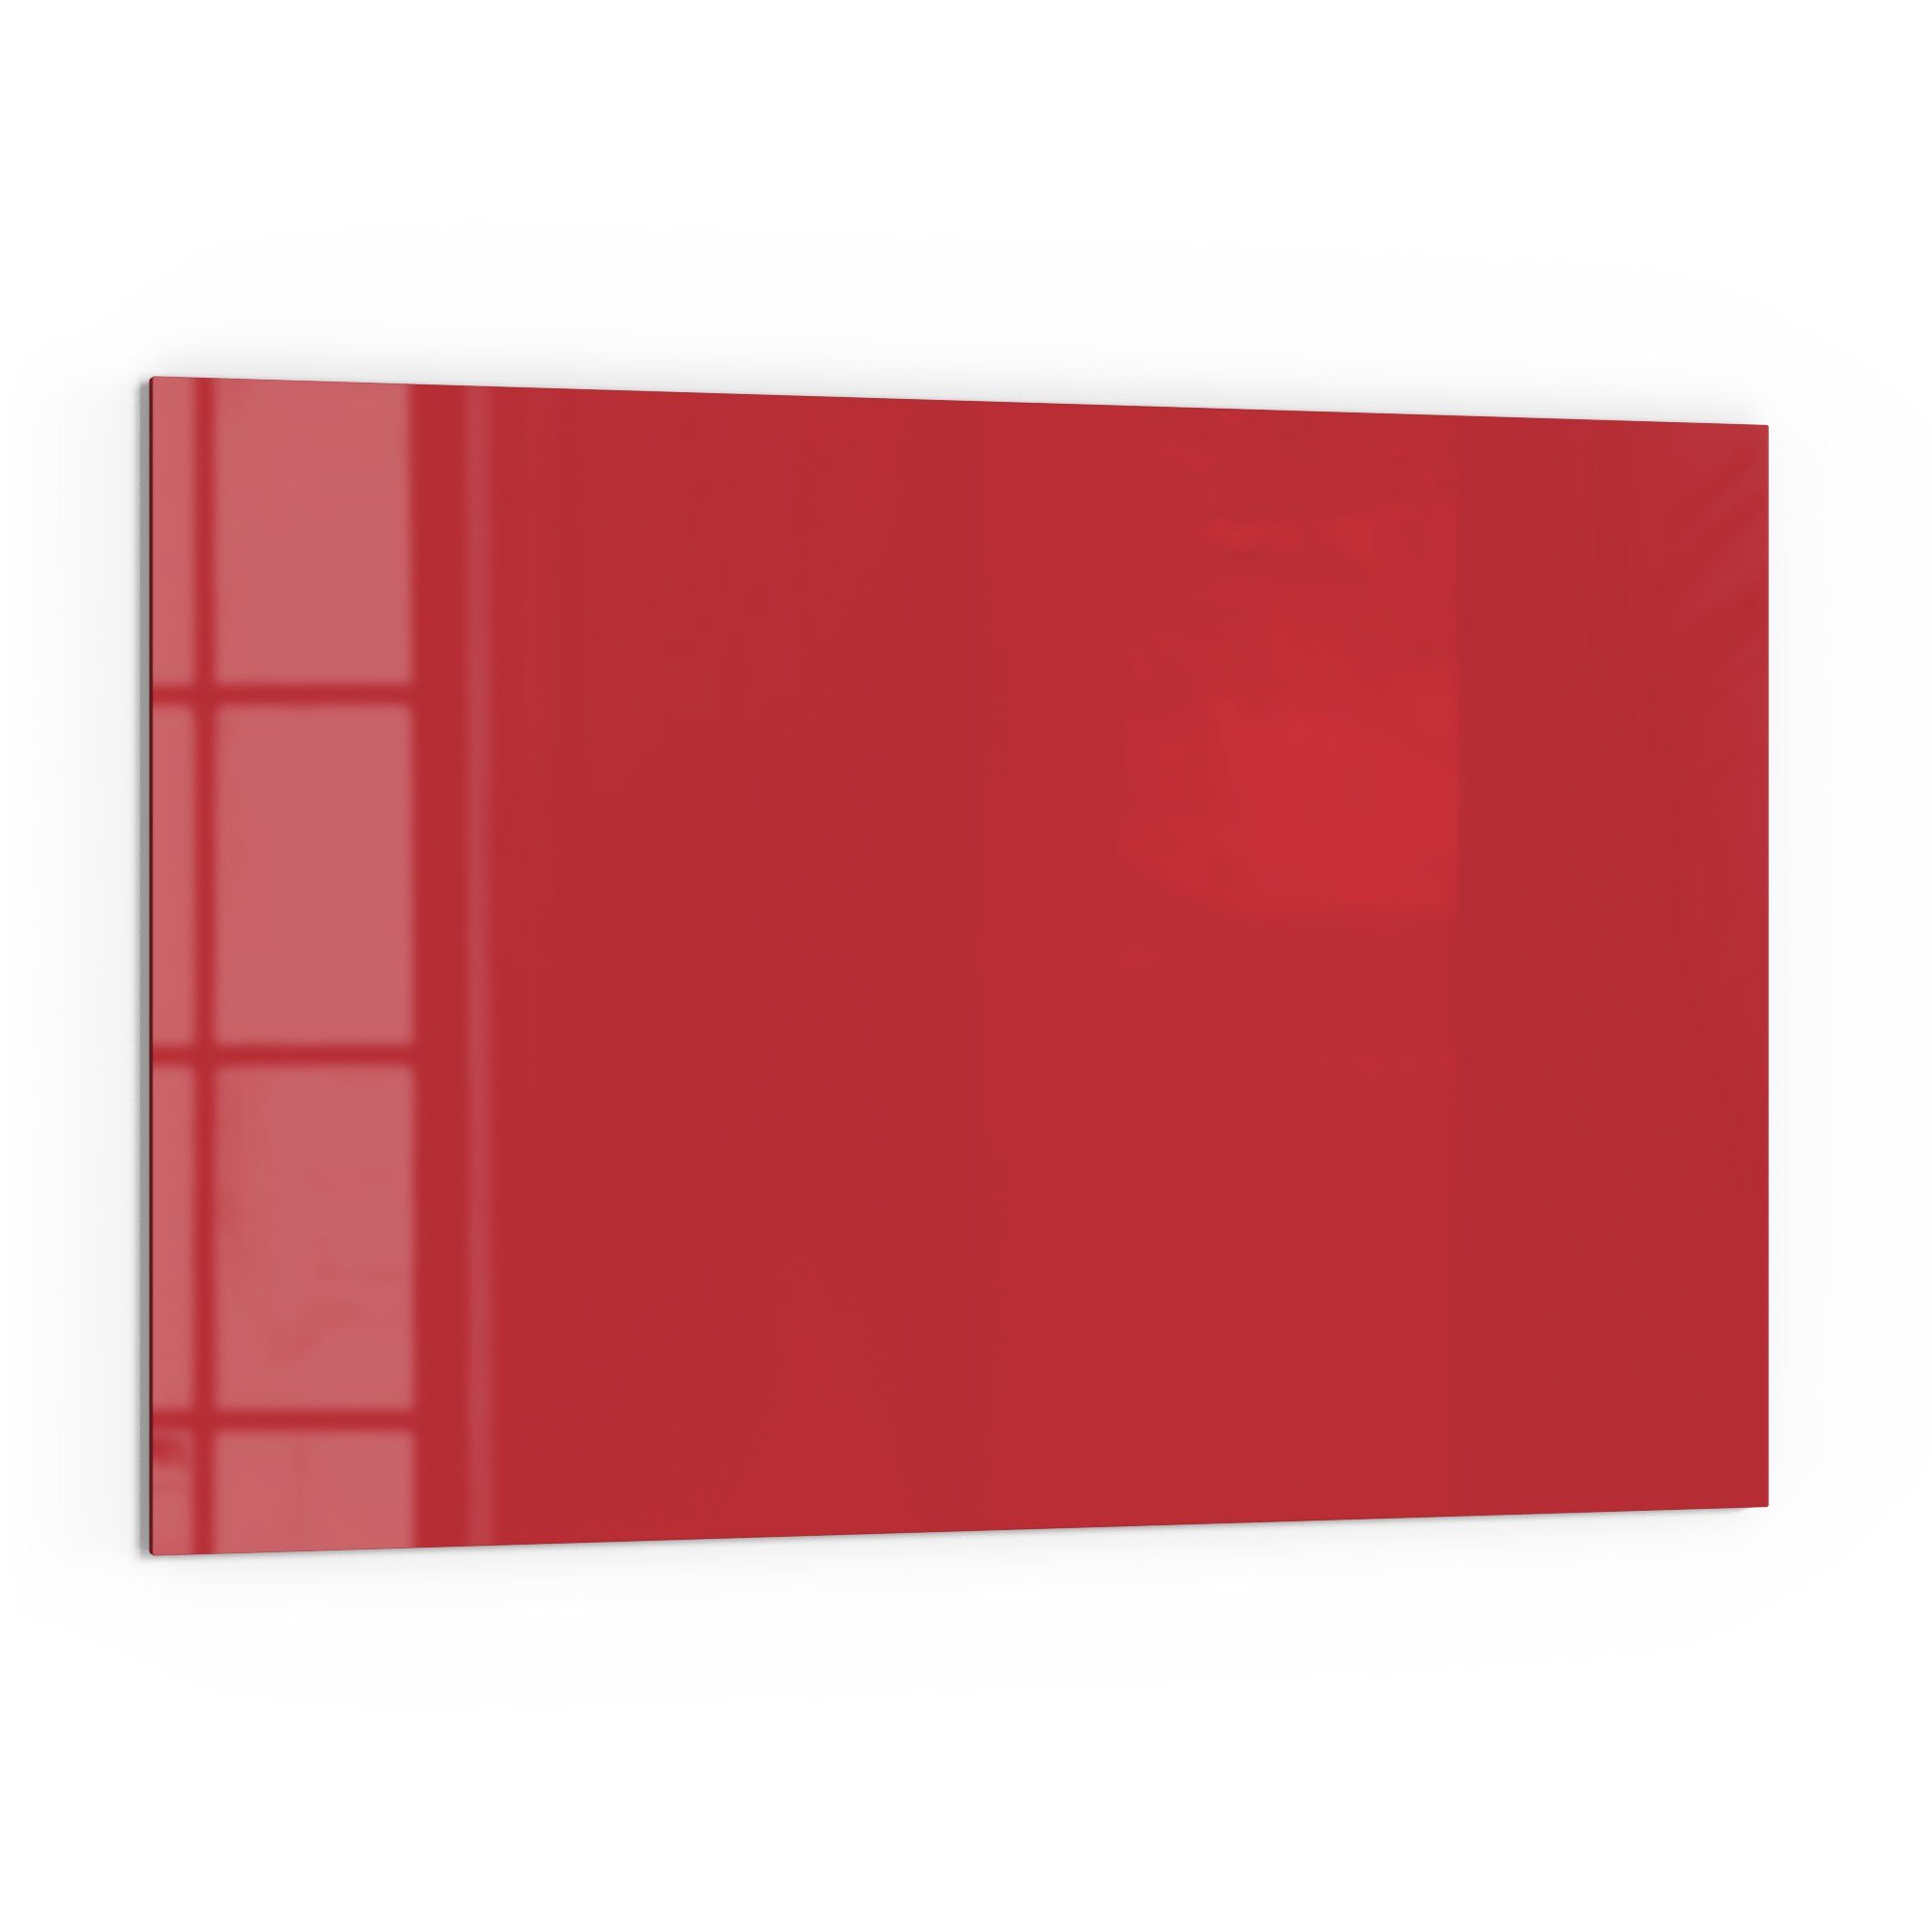 DEQORI Küchenrückwand 'Unifarben - Rot', Glas Spritzschutz Badrückwand Herdblende